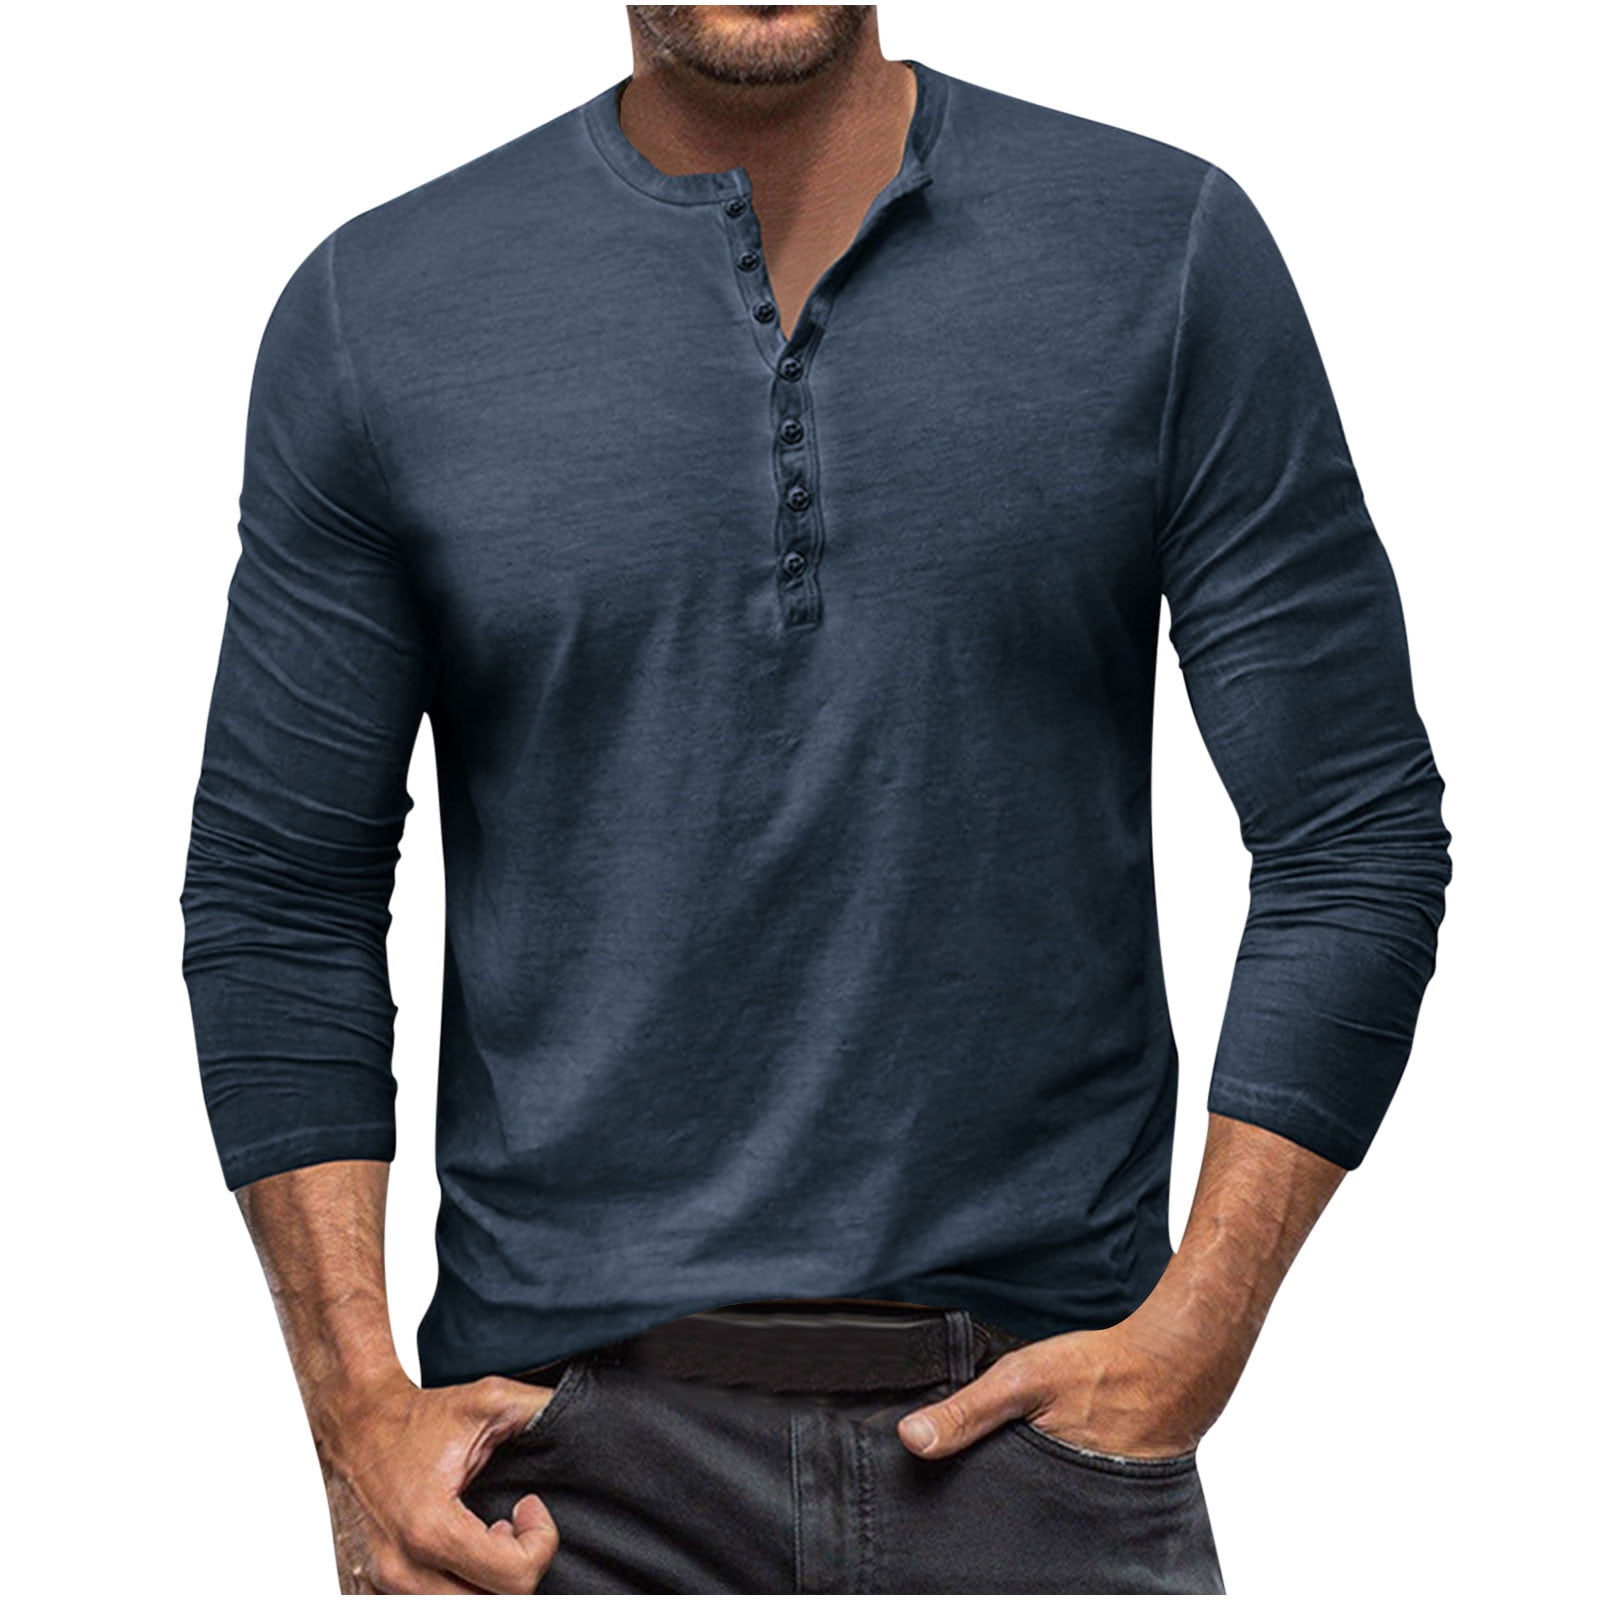 Ryrjj Mens Henley Shirts Long Sleeve T Shirt Fashion Casual Slim Fit Lightweight Basic Plain Pullover Tee Shirts(Dark Gray,3XL), Men's